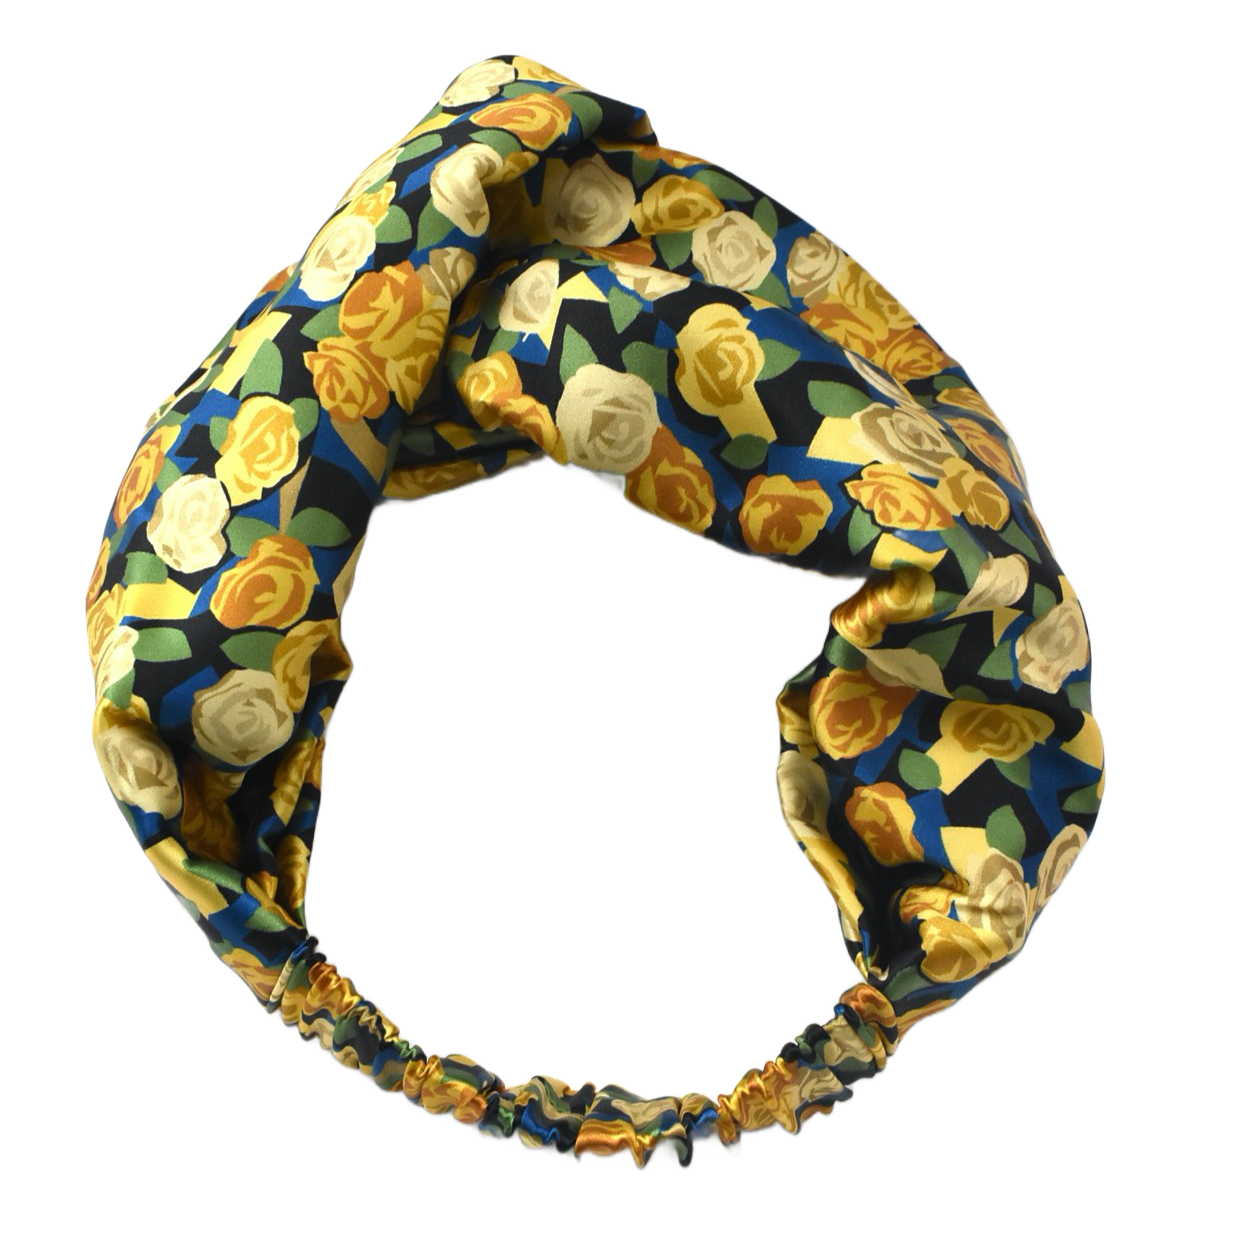 Silk Twisted Turban hairband and neck scarf in Liberty London Stone Garden Yellow Roses - 100% Silk-Satin